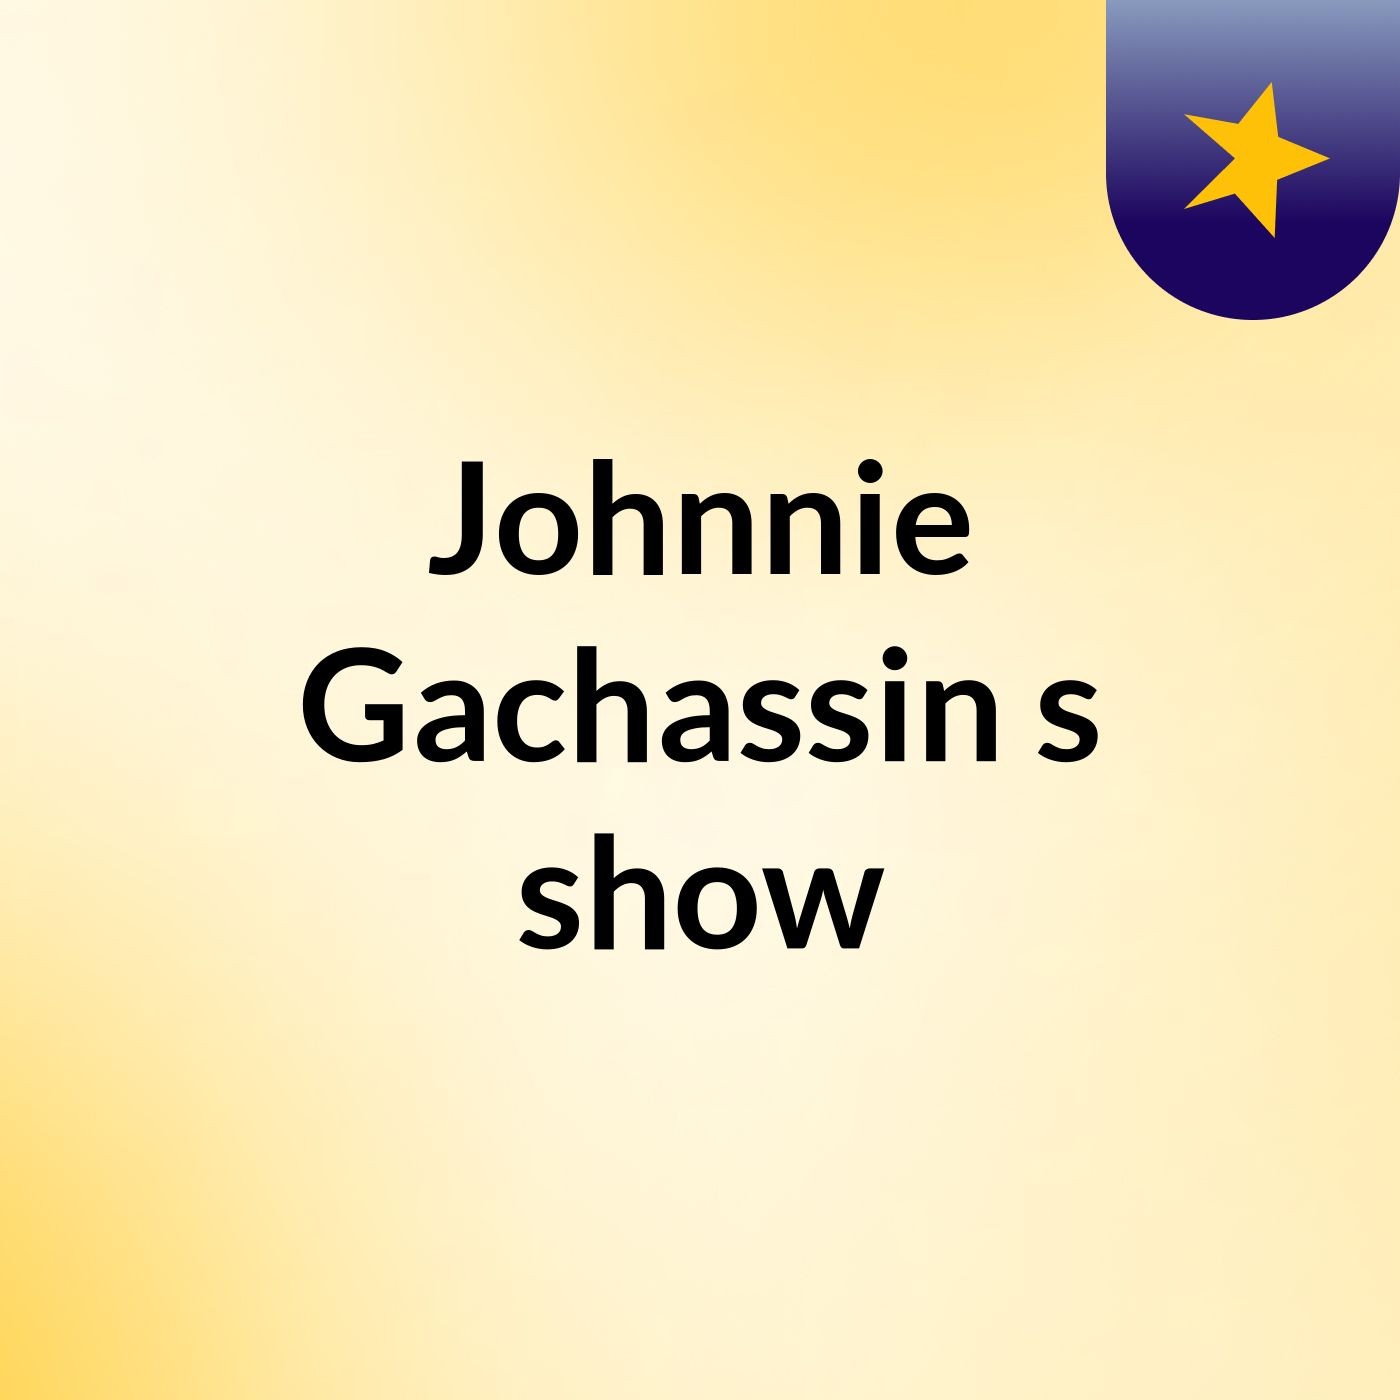 Johnnie Gachassin's show